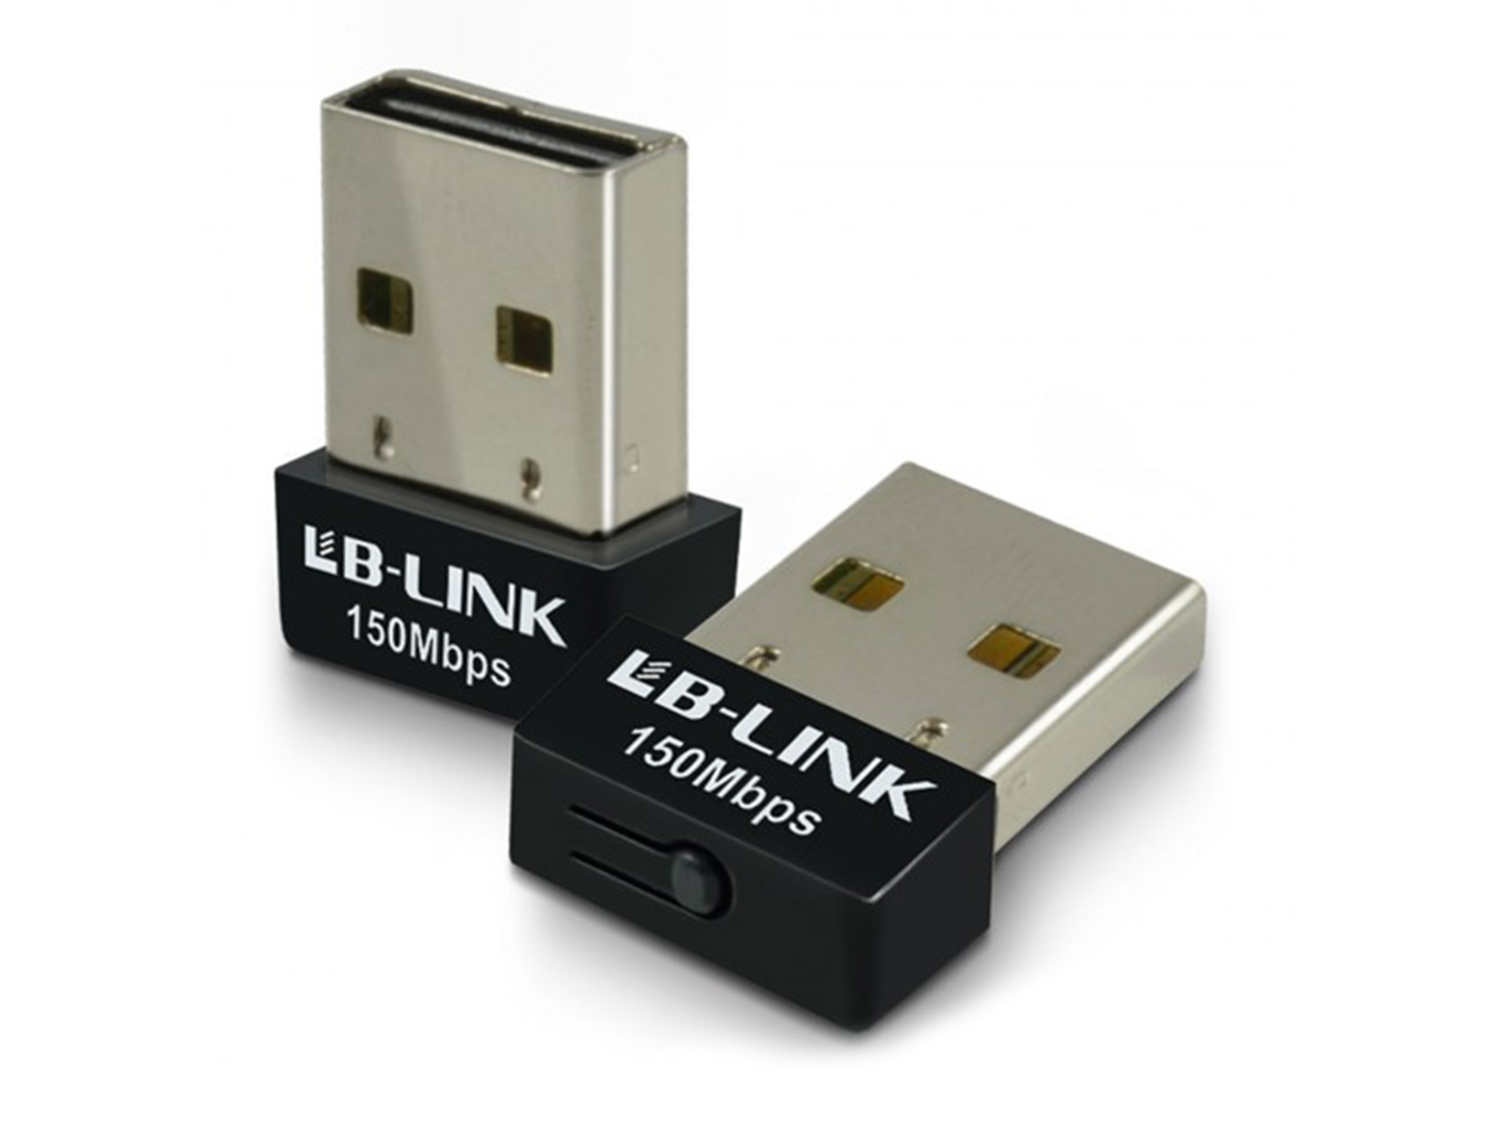 LB-Link 150Mbps NANO WIRELESS N USB ADAPTER